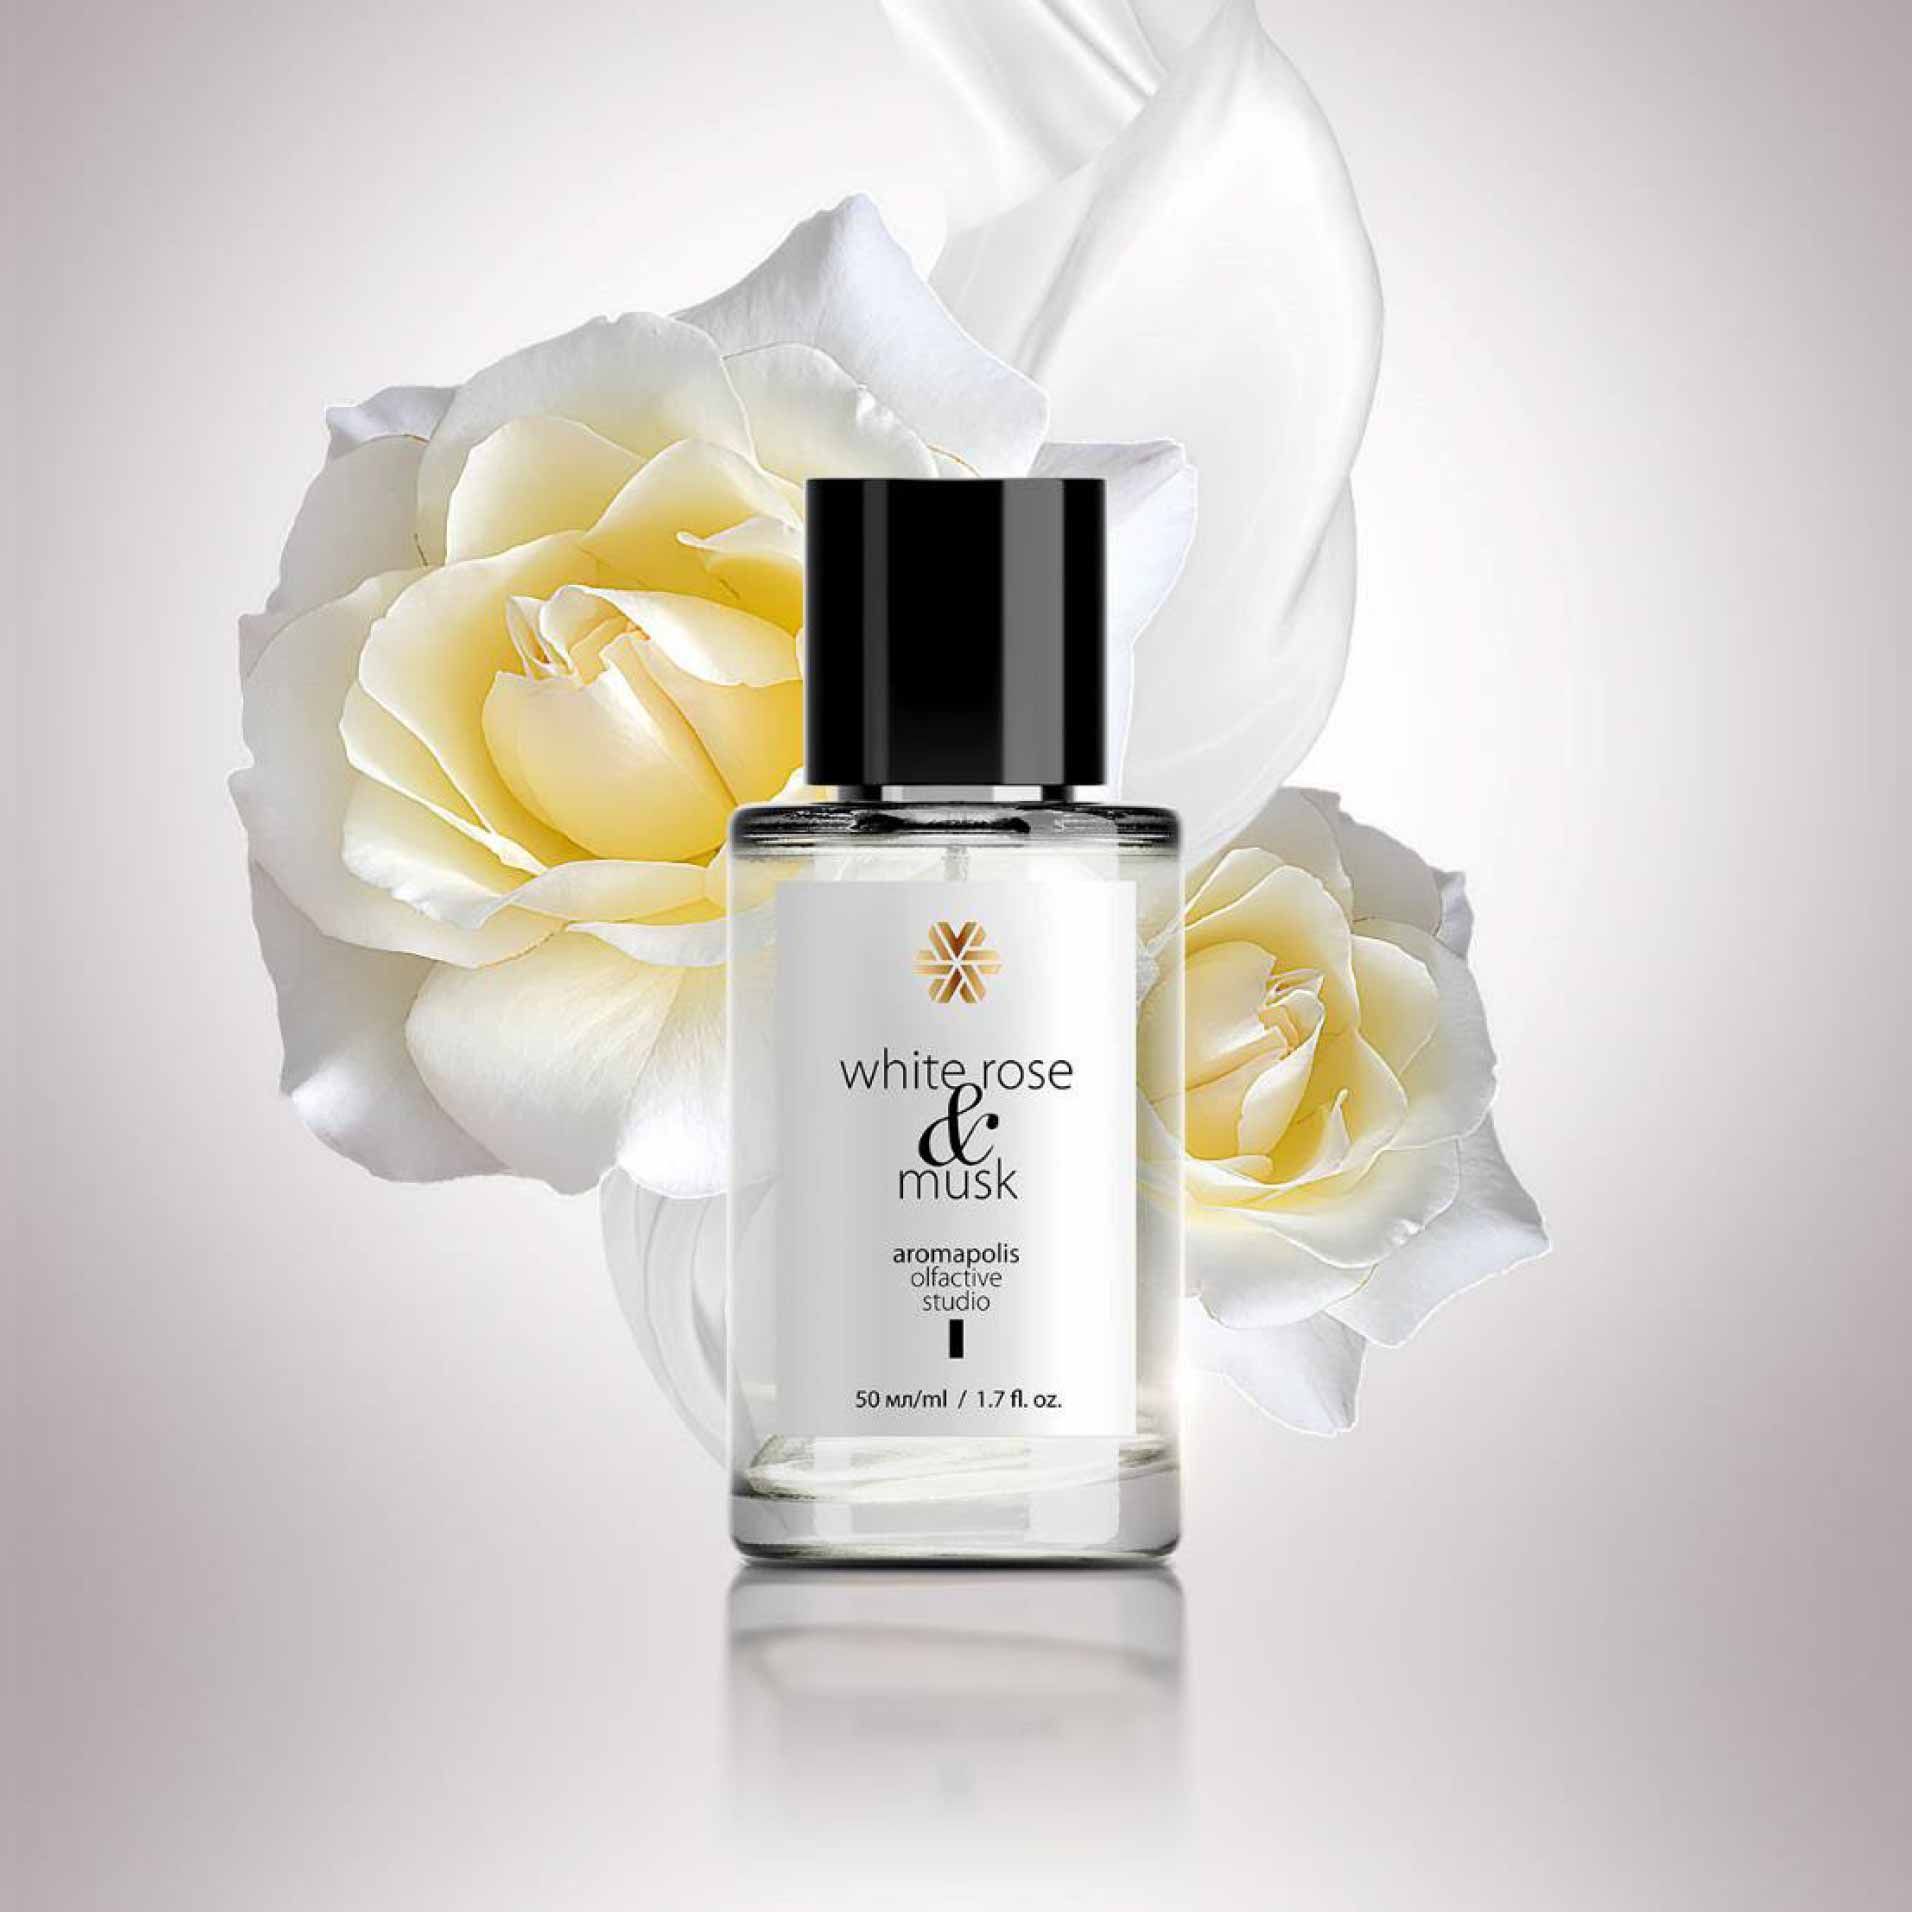 Aromapolis Olfactive Studio - White Rose & Musk, парфюмерная вода, 50 мл